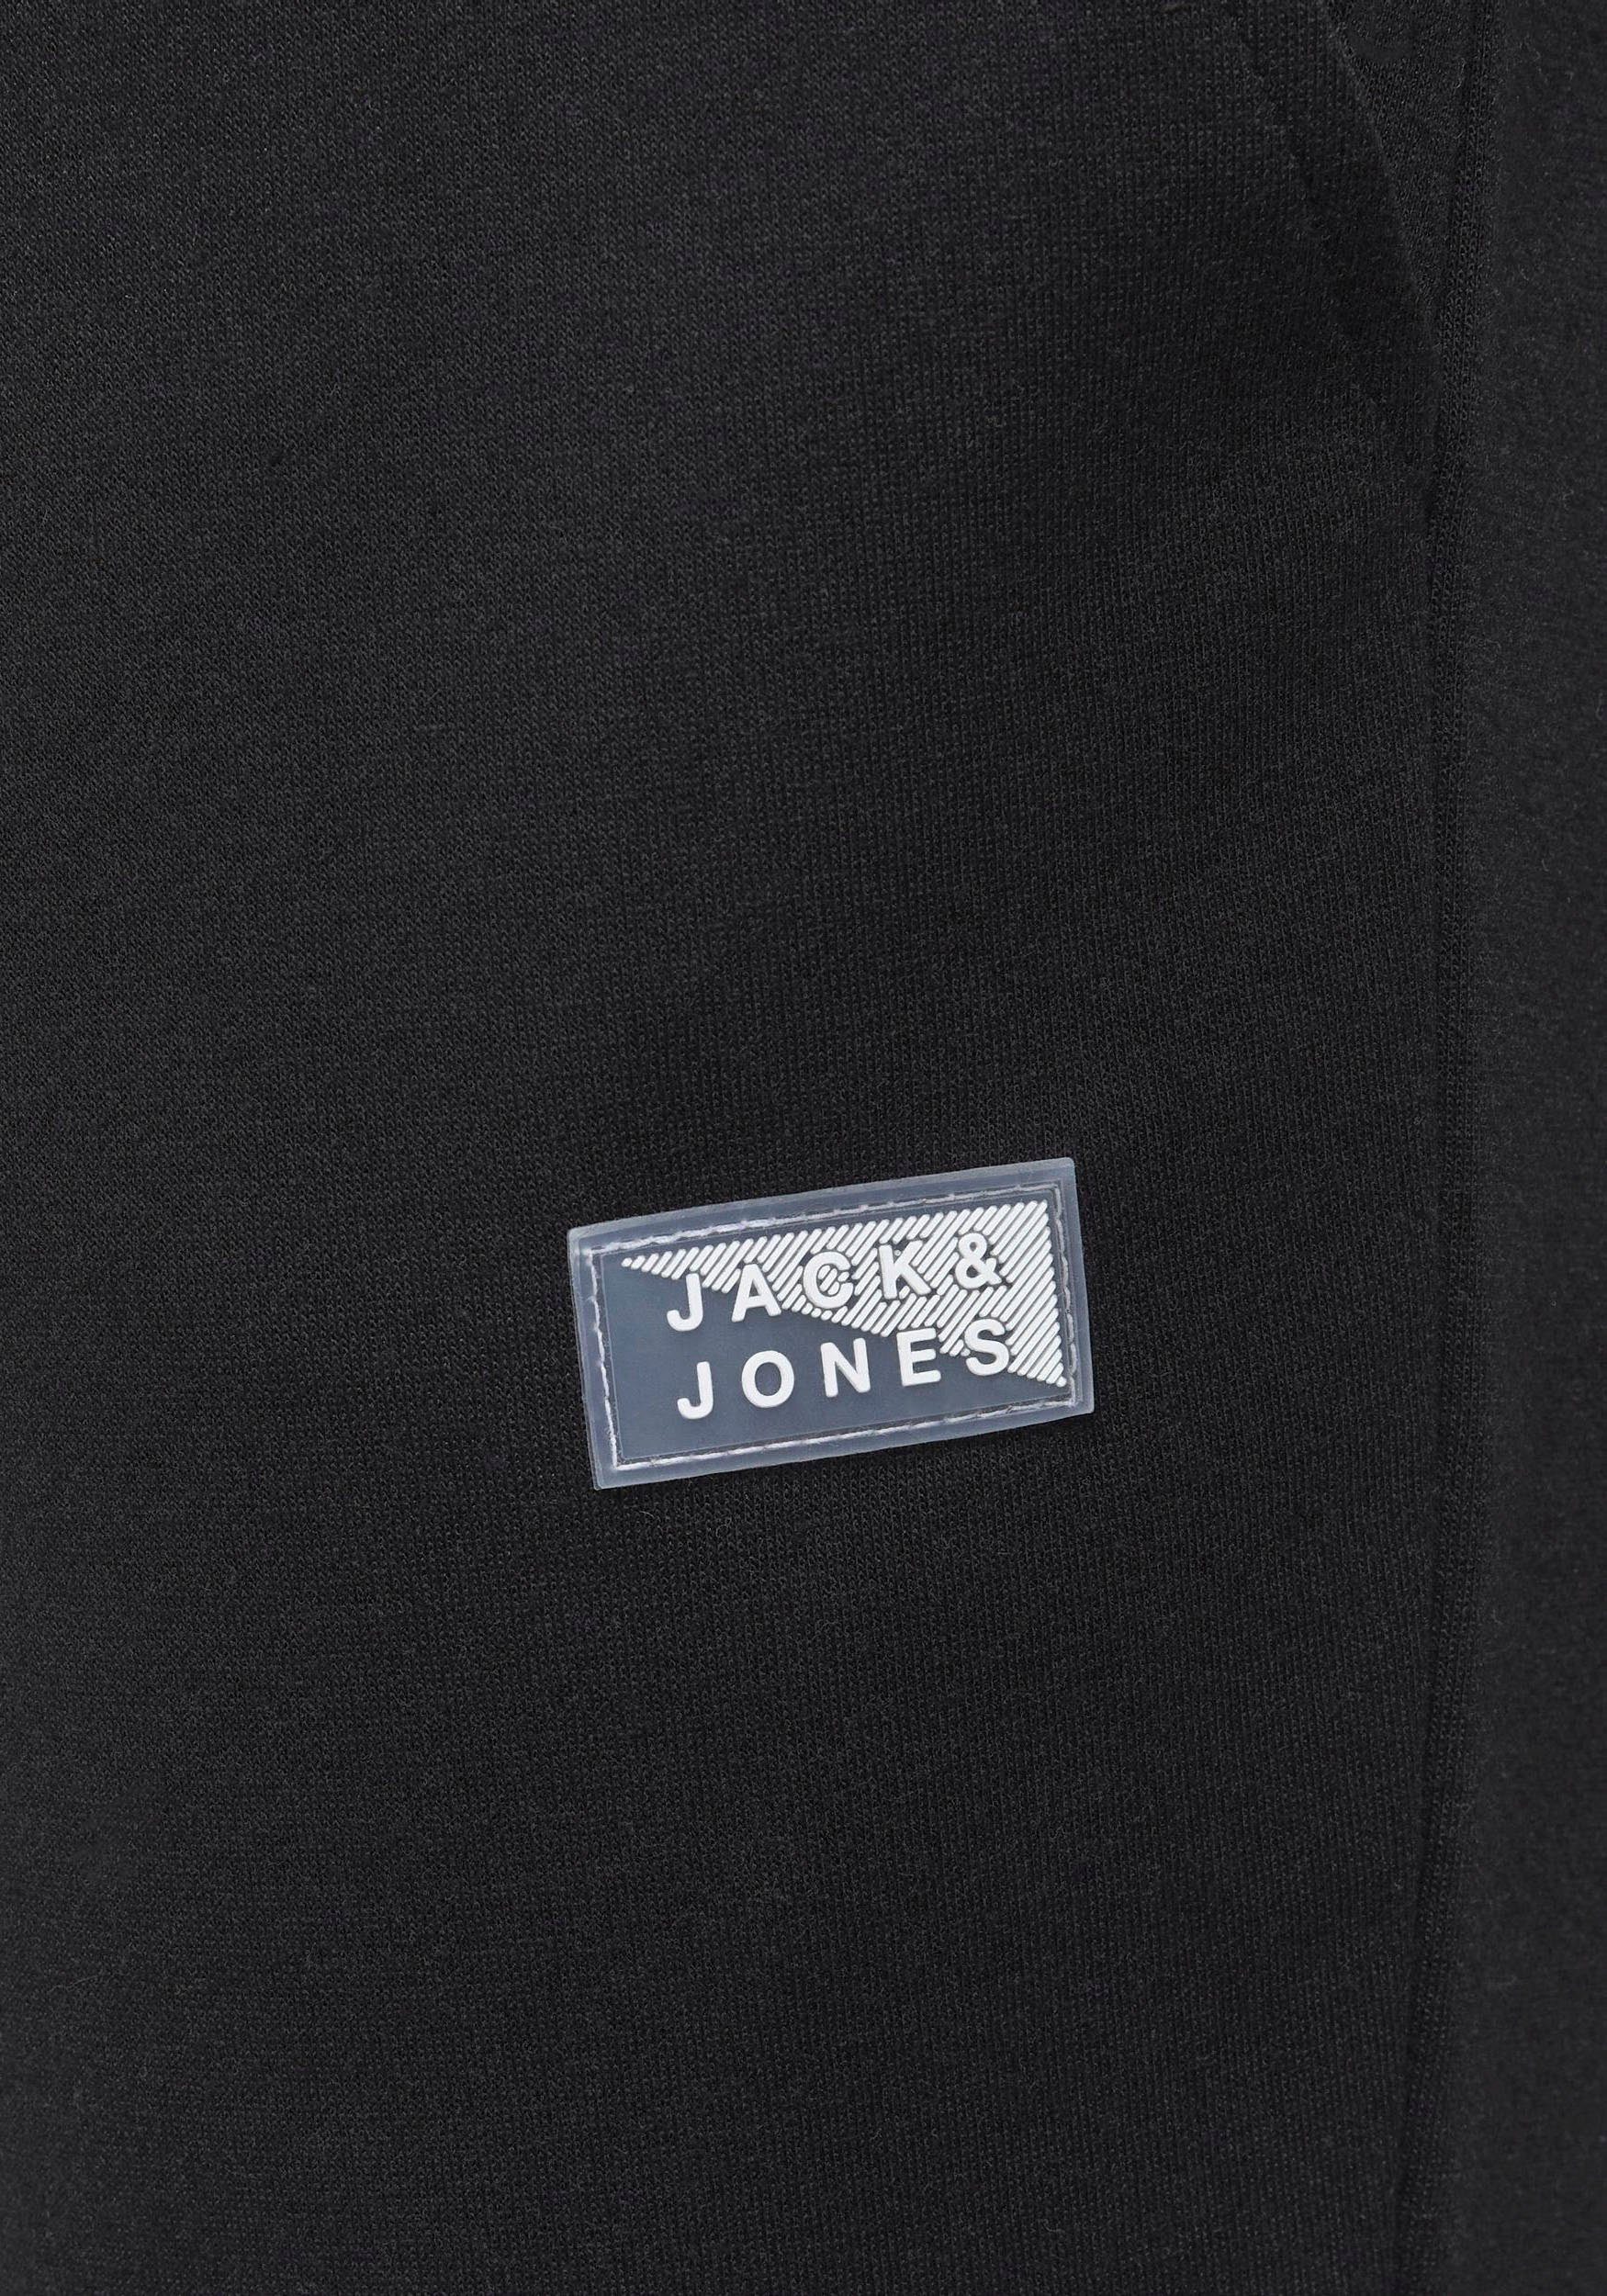 & schwarz Sweatpants PANTS Jack Jones SWEAT AIR